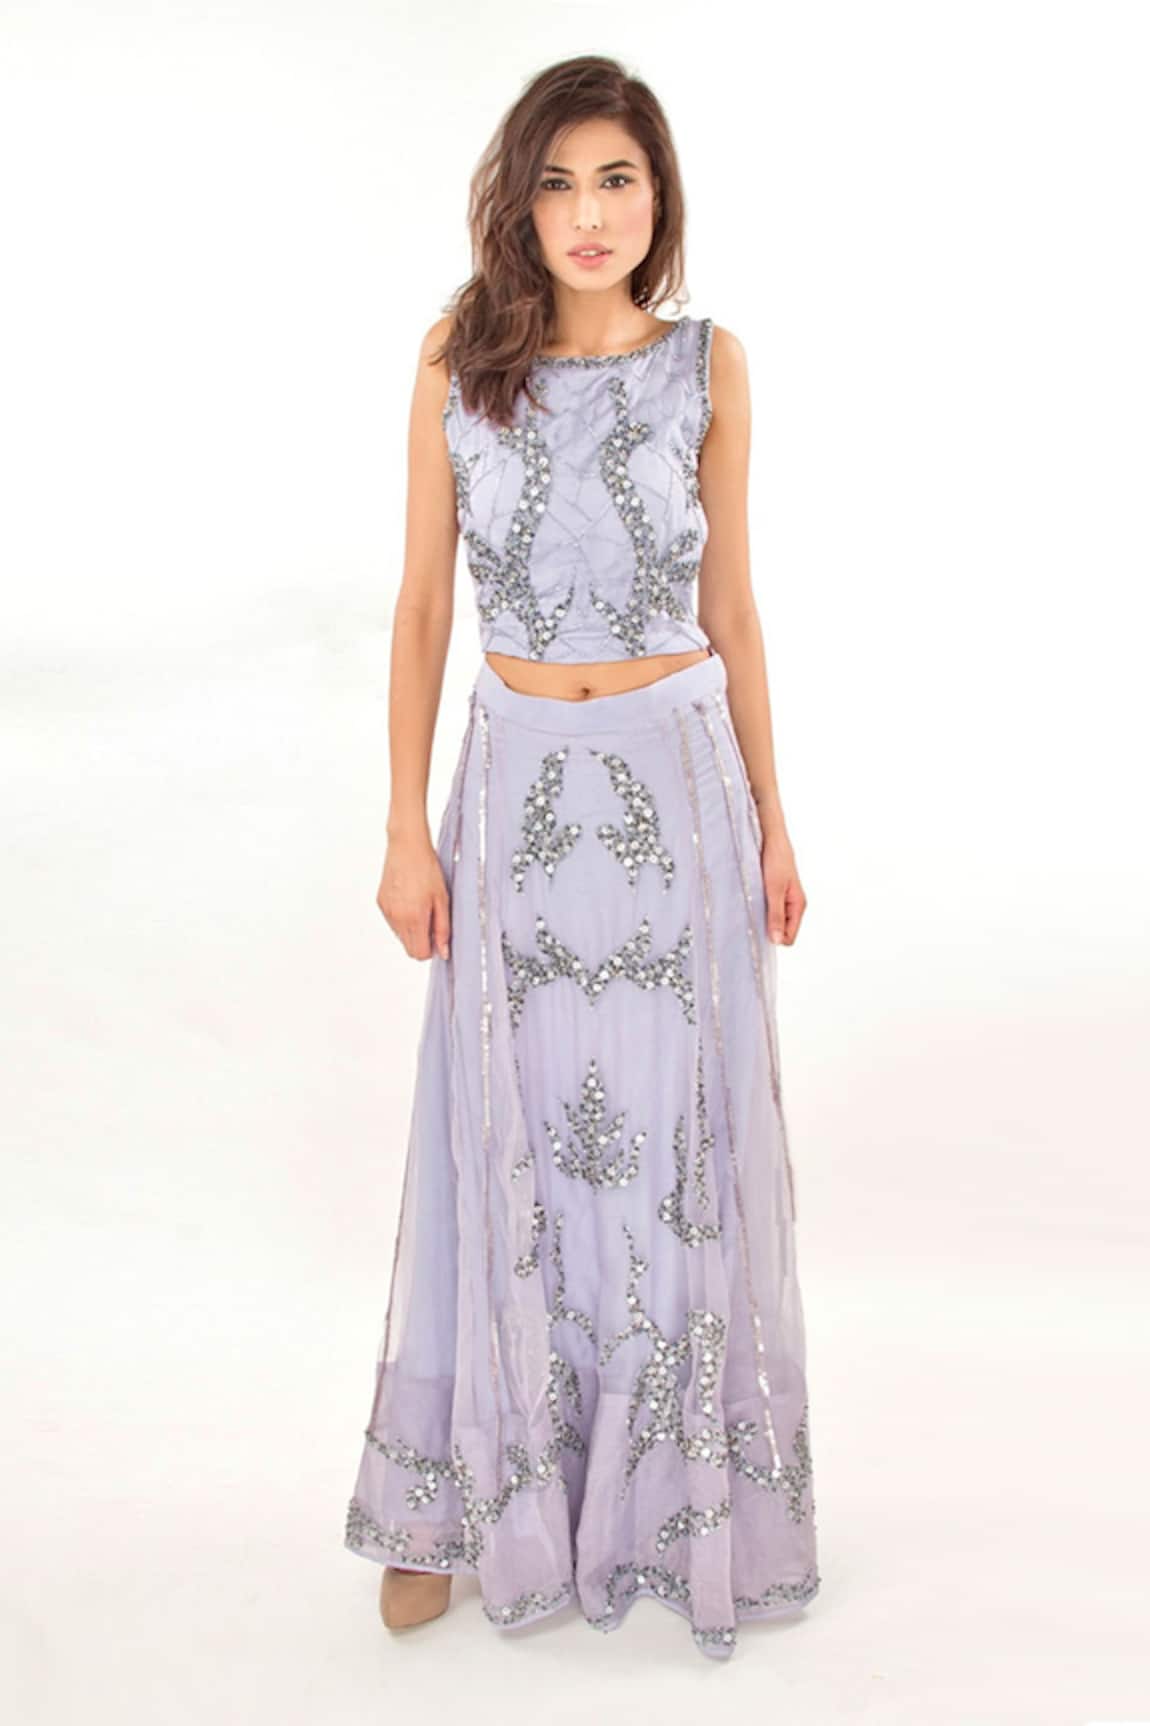 Jasmine Bains Embroidered Top & Skirt Set